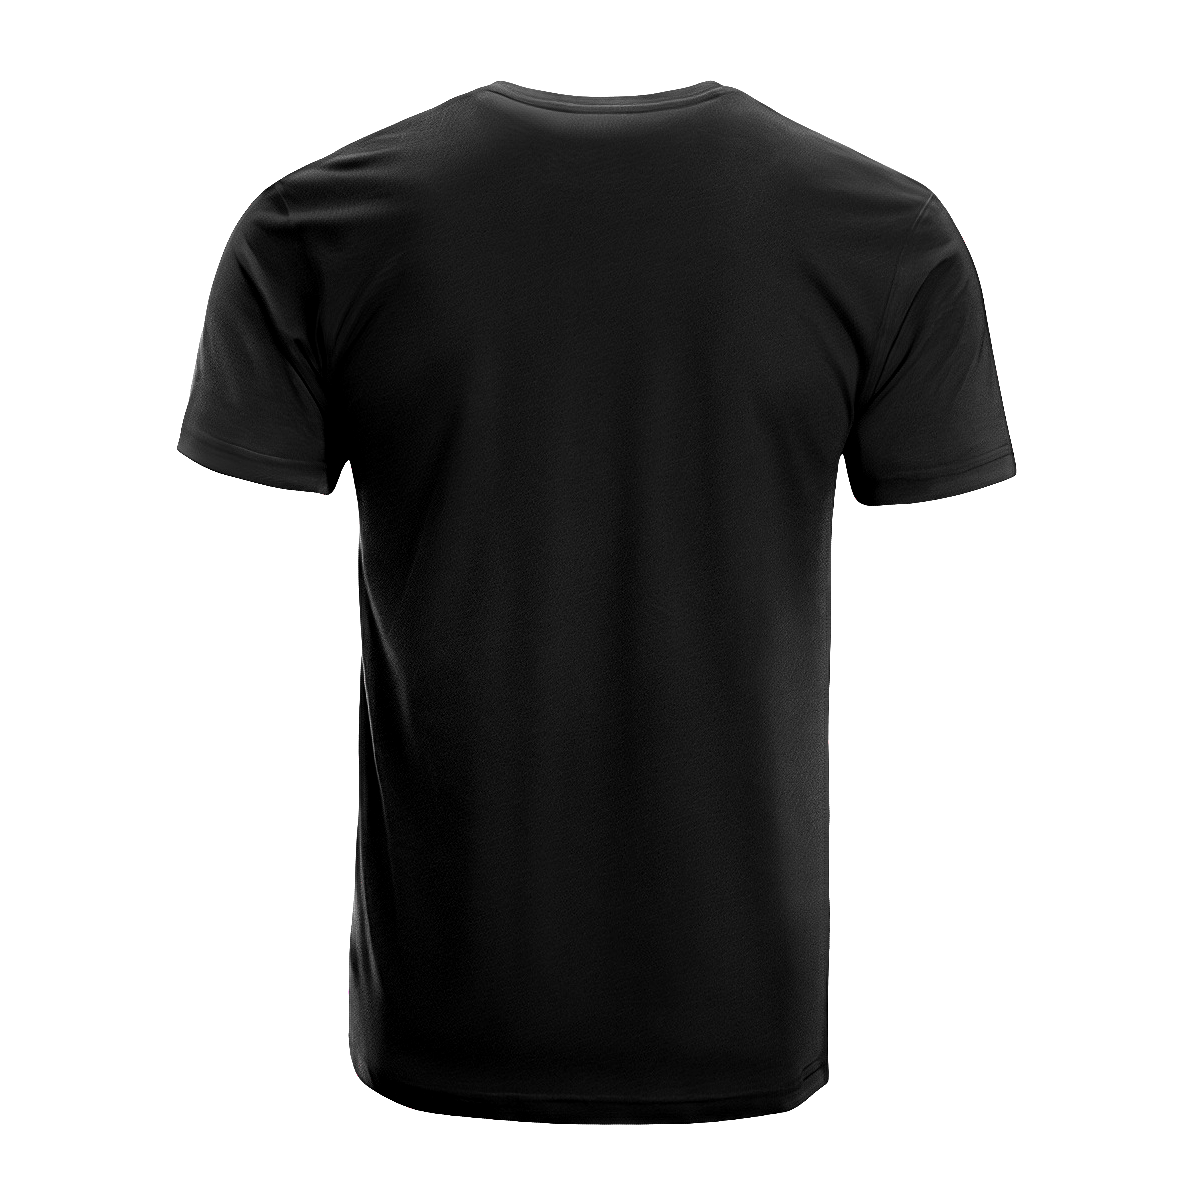 Bethune Tartan Crest T-shirt - I'm not yelling style